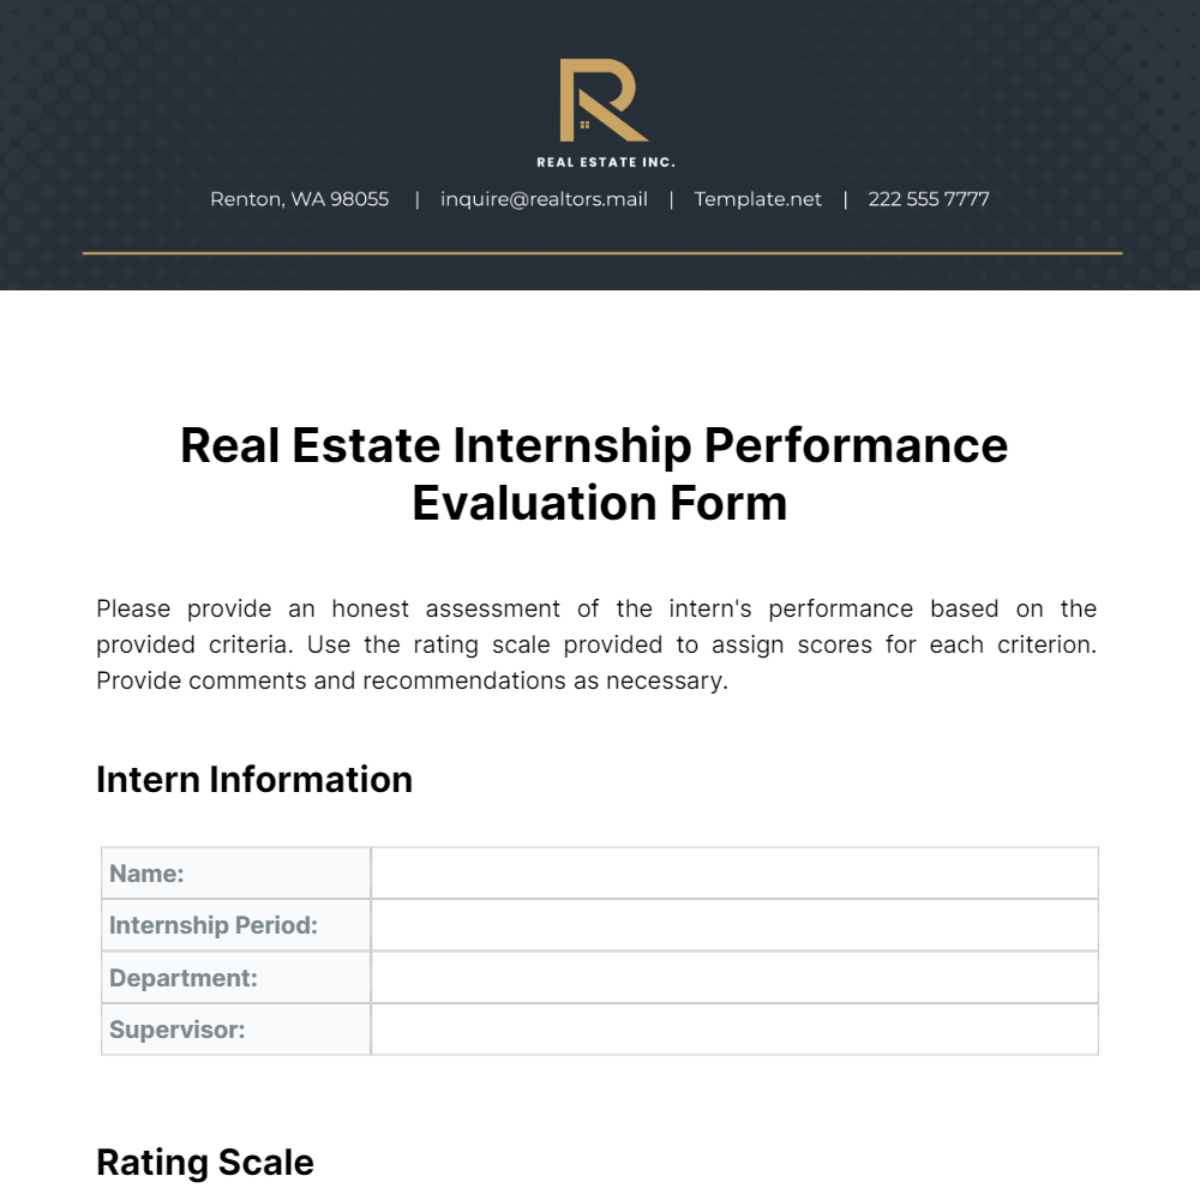 Real Estate Internship Performance Evaluation Form Template